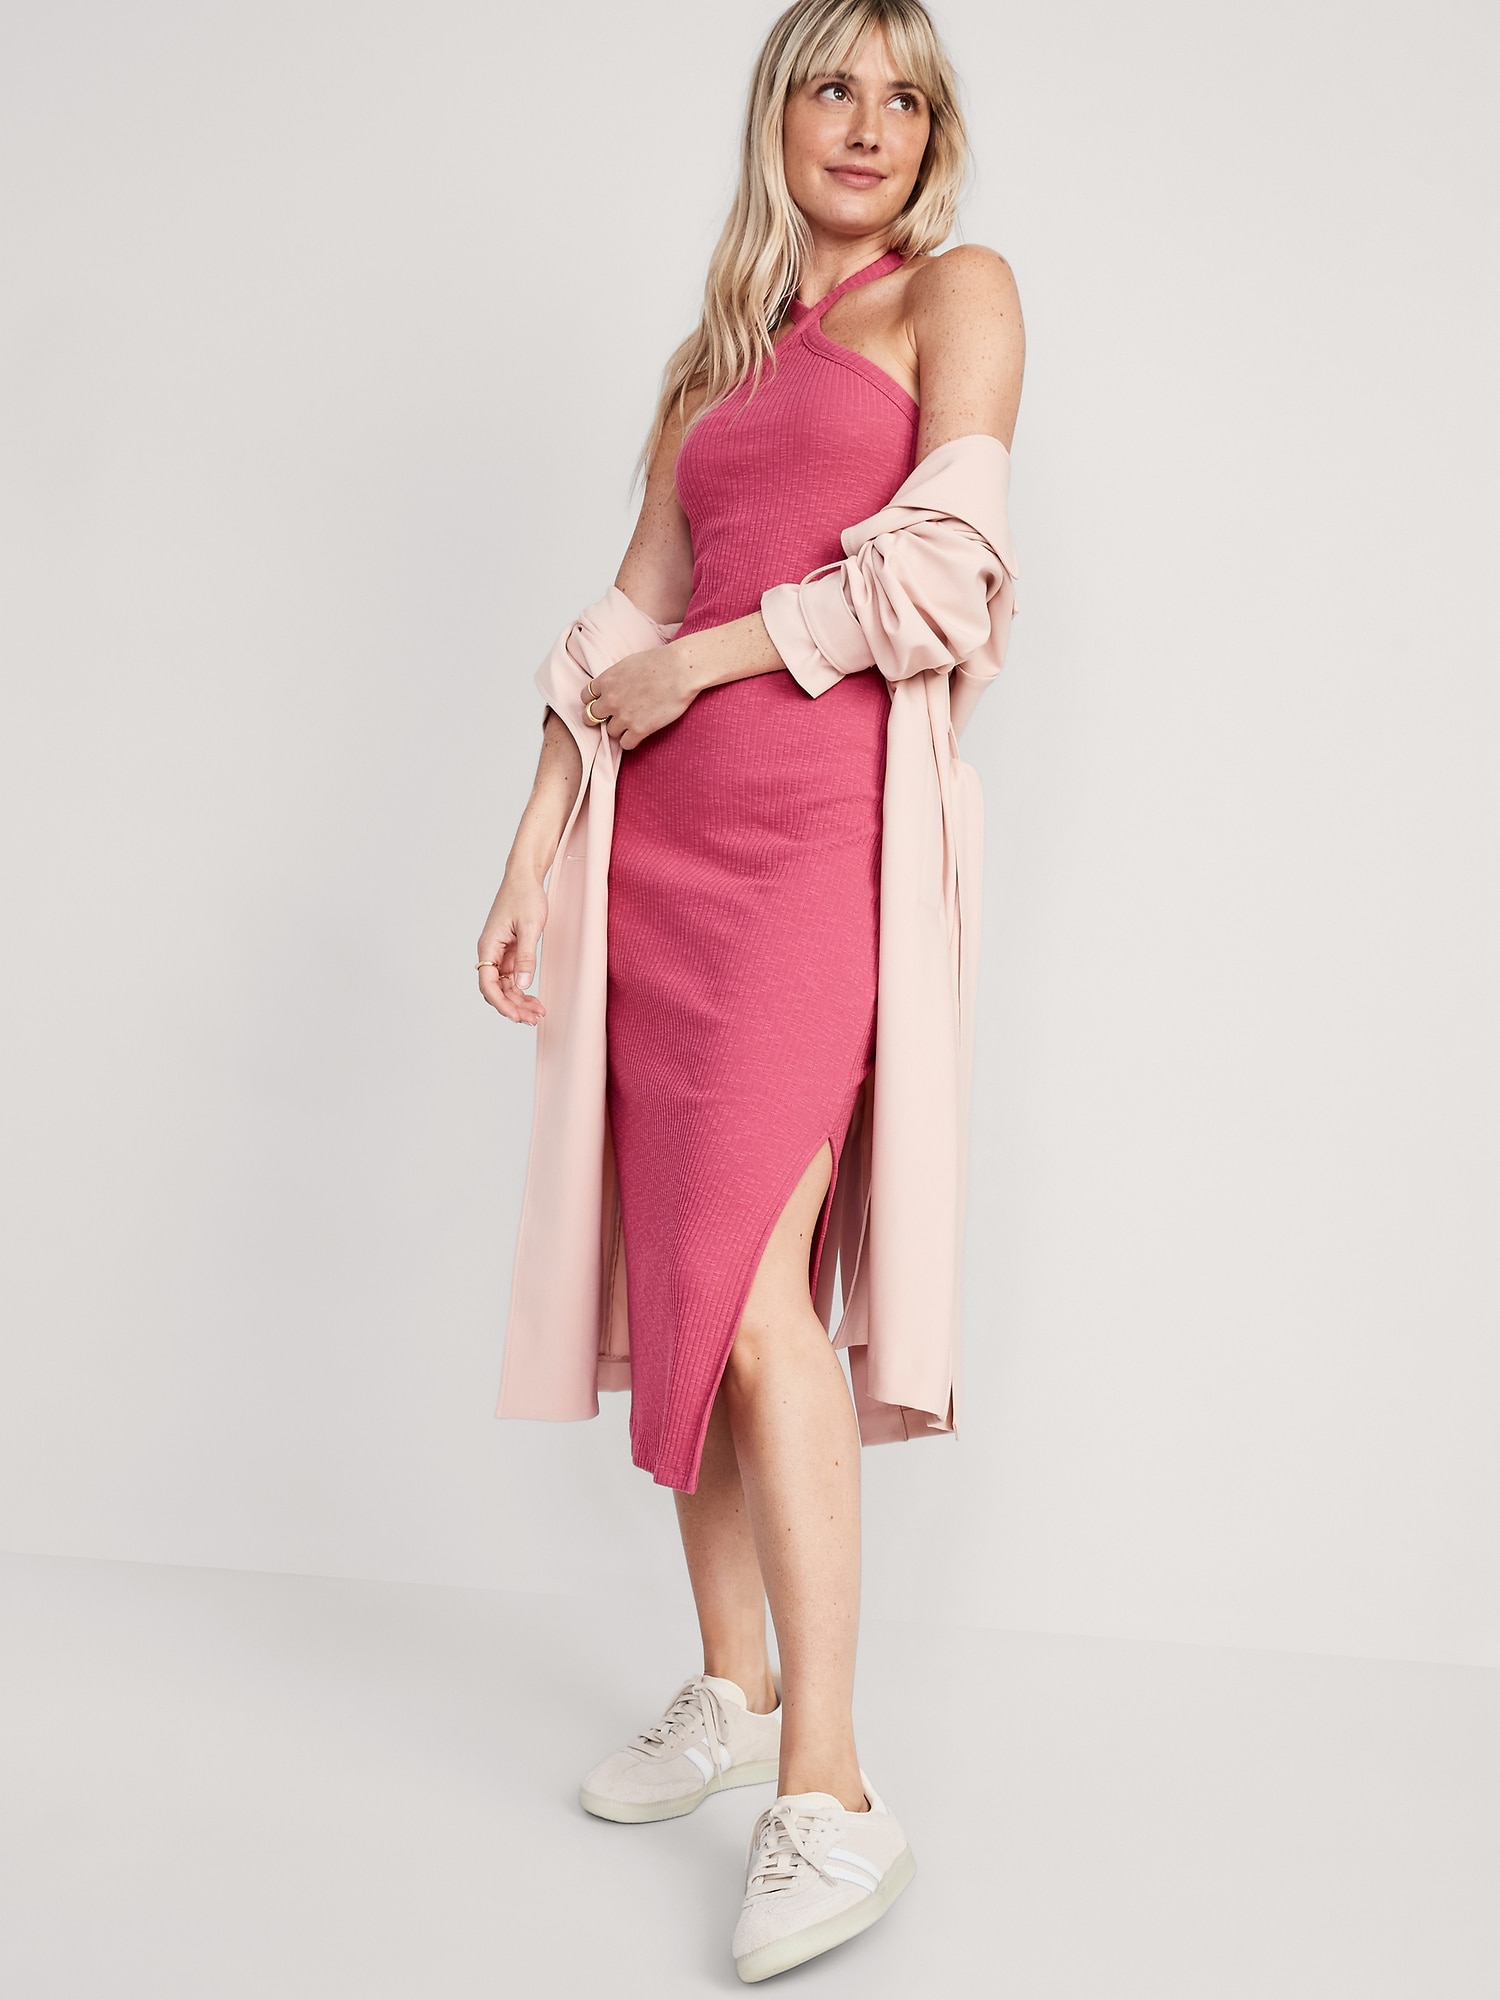 Cream and pink block printed midi dress by Rira | The Secret Label